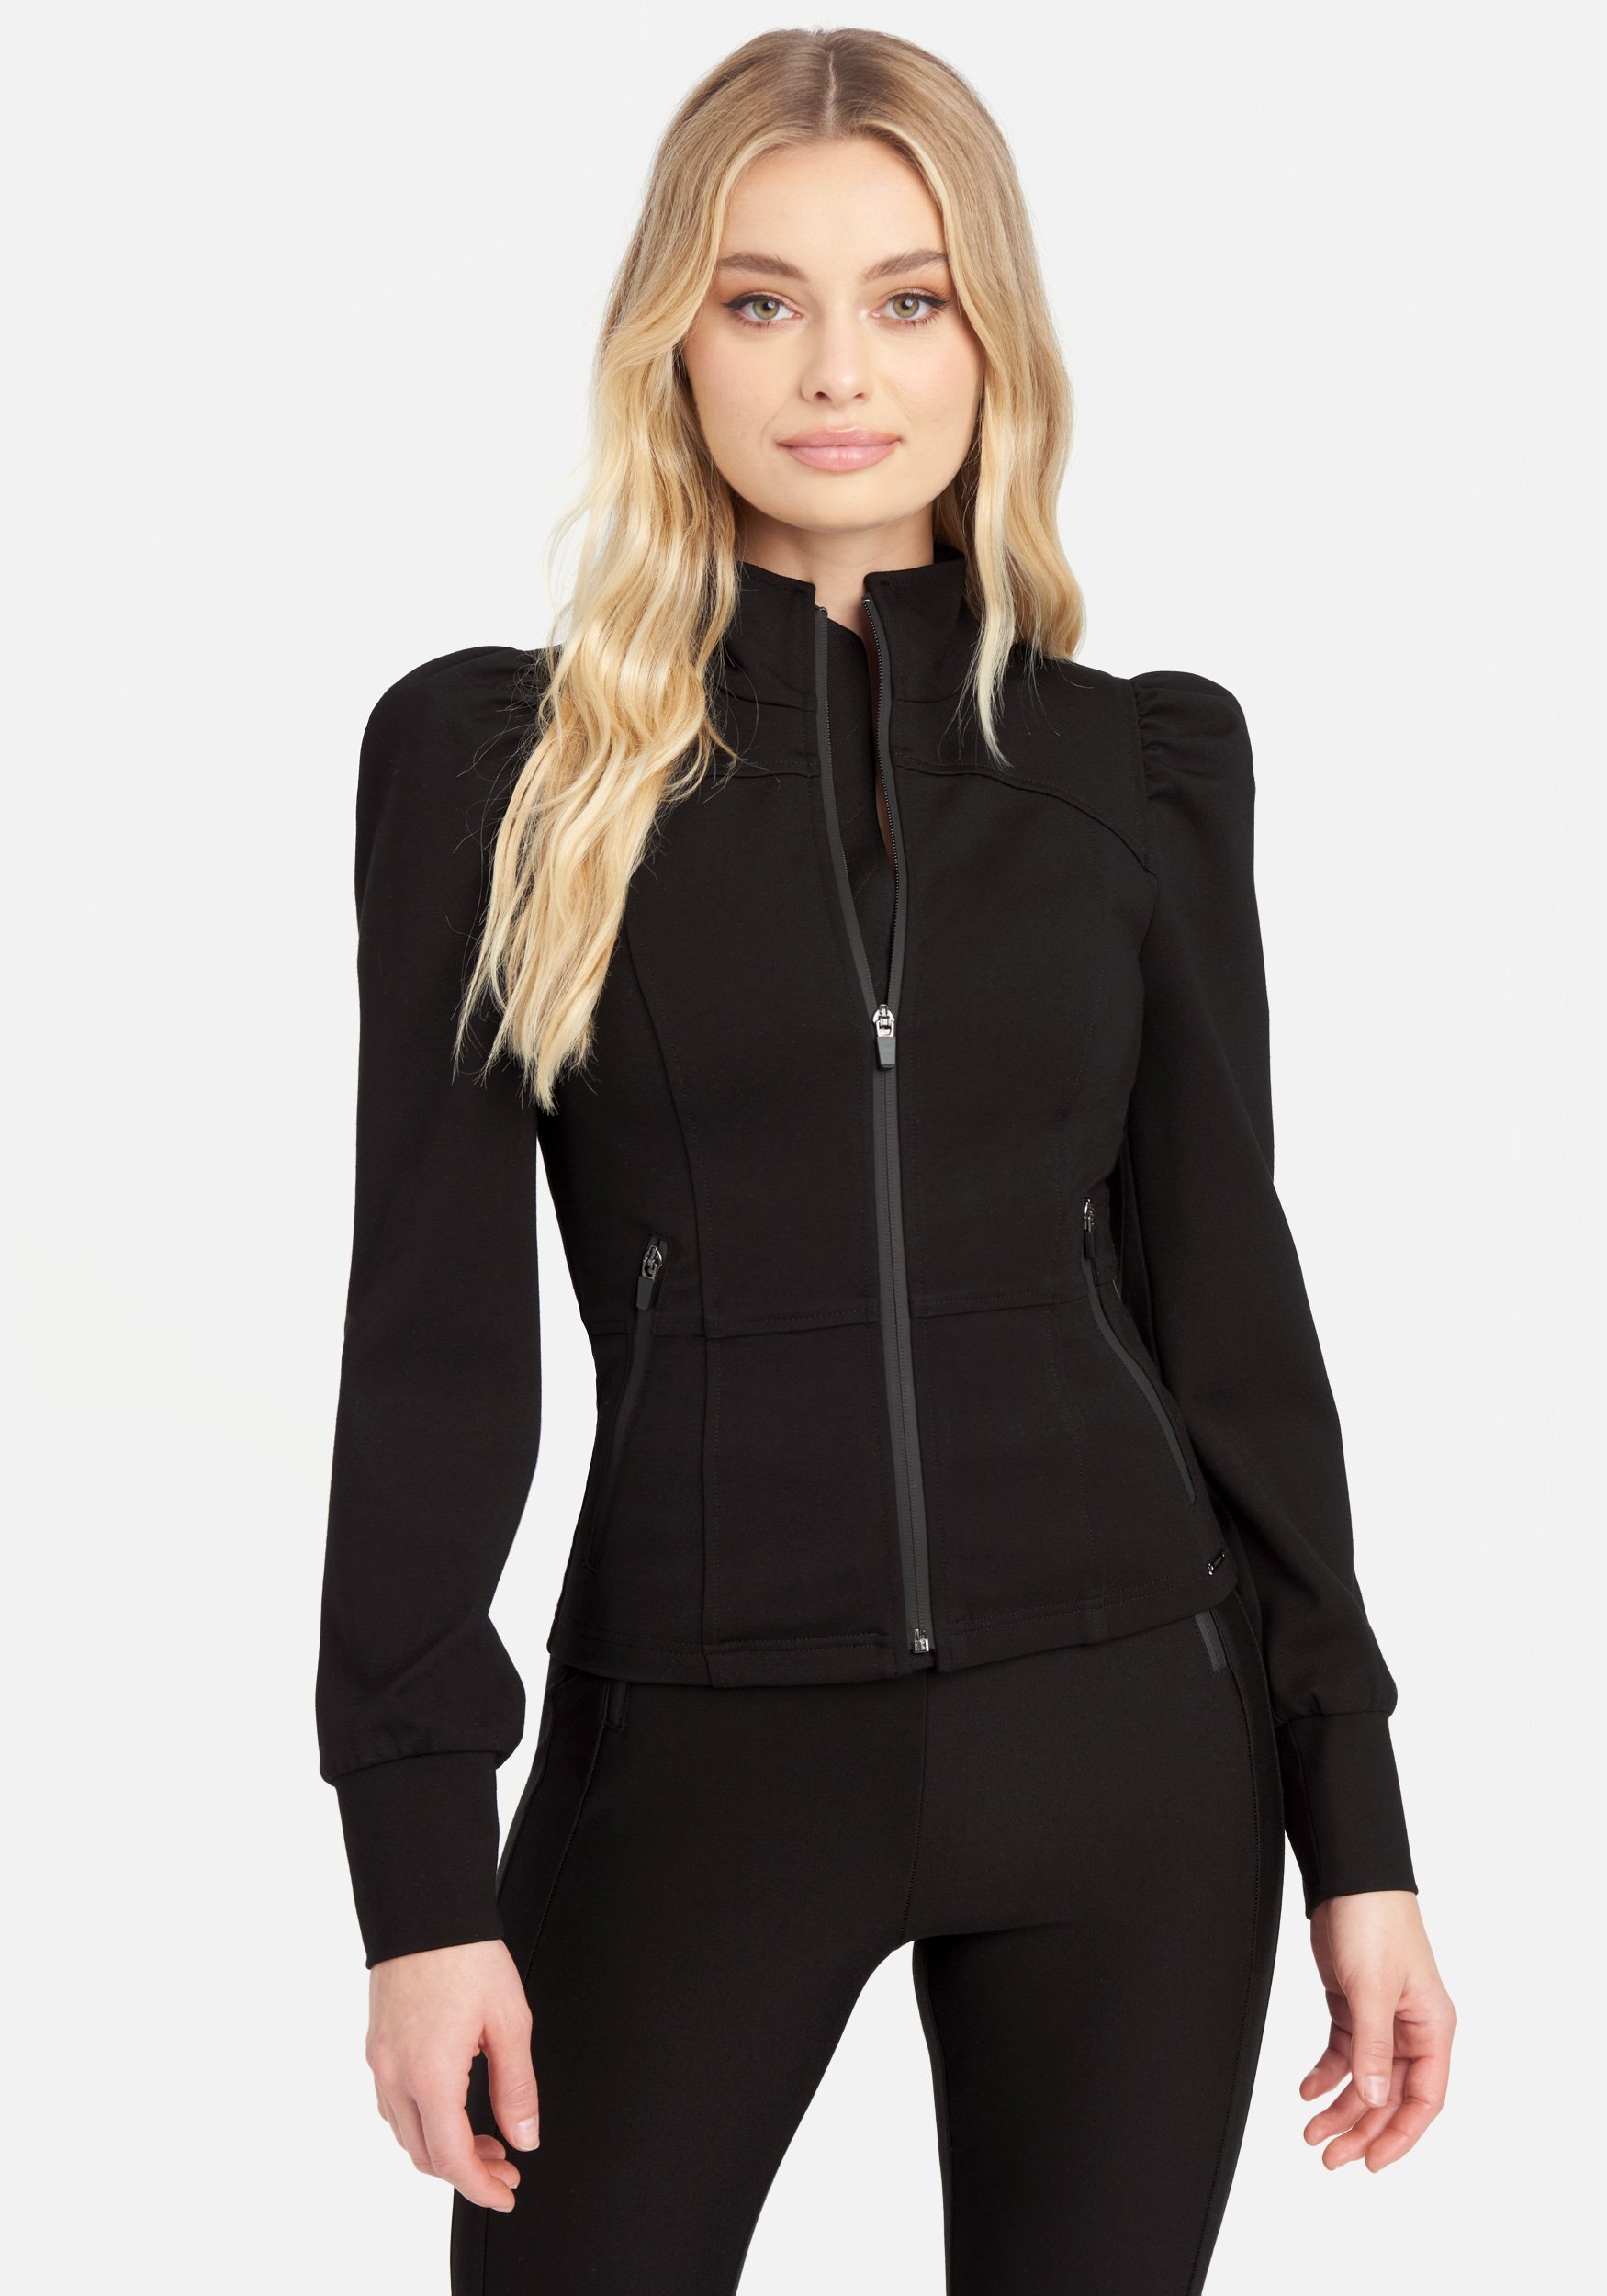 Bebe Women's Ponte Zipper Detail Jacket, Size Large in Black Spandex/Nylon